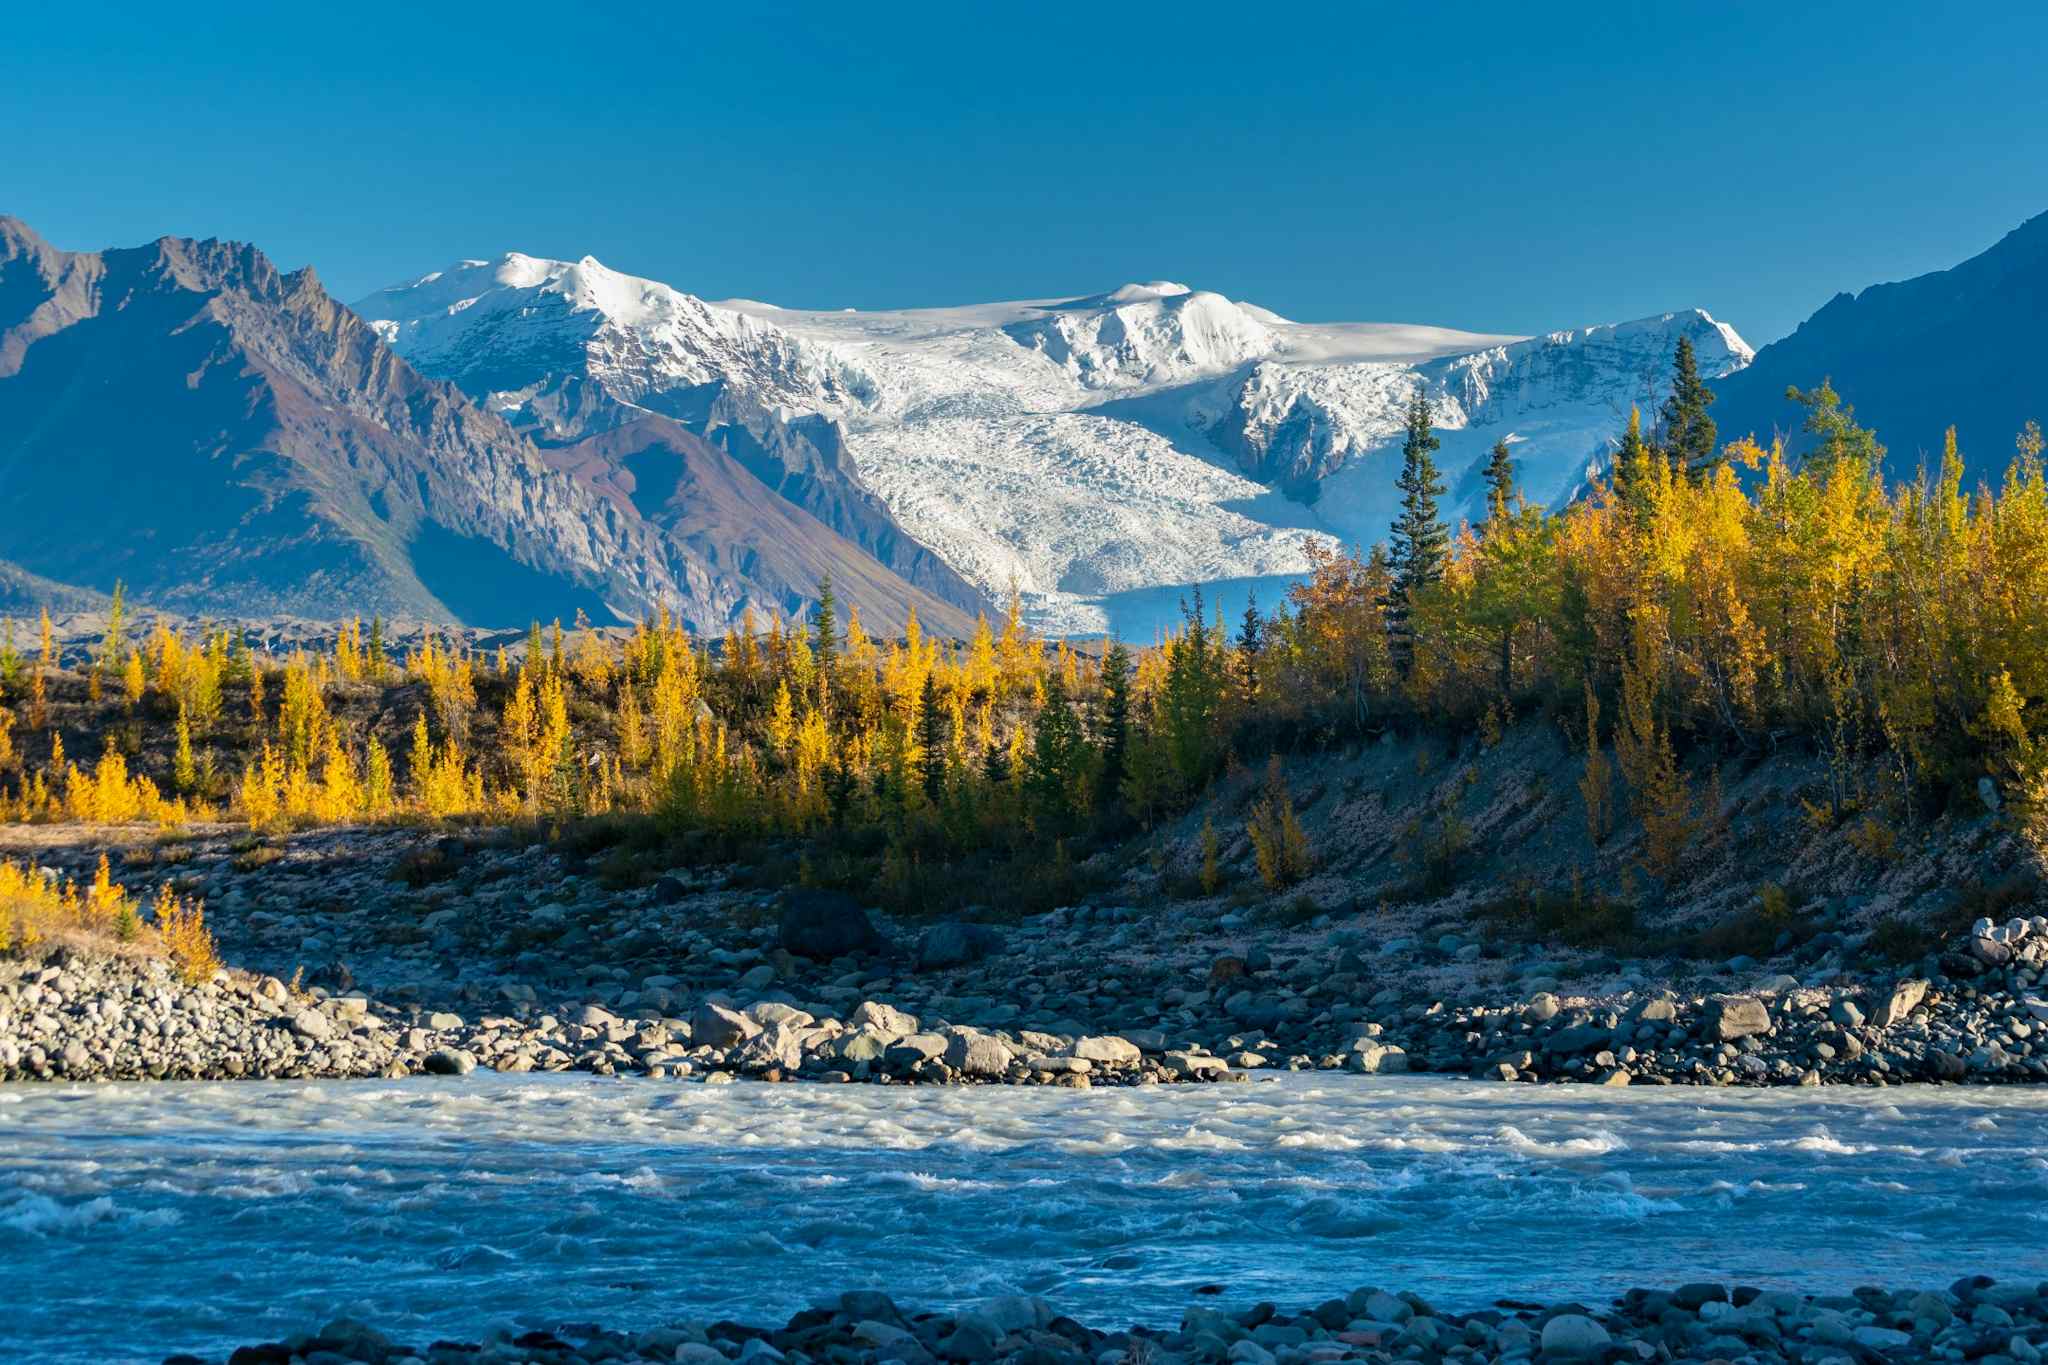 McCarthy, Wrangel St Elias National Park, Alaska, USA
Getty: 1225339669
